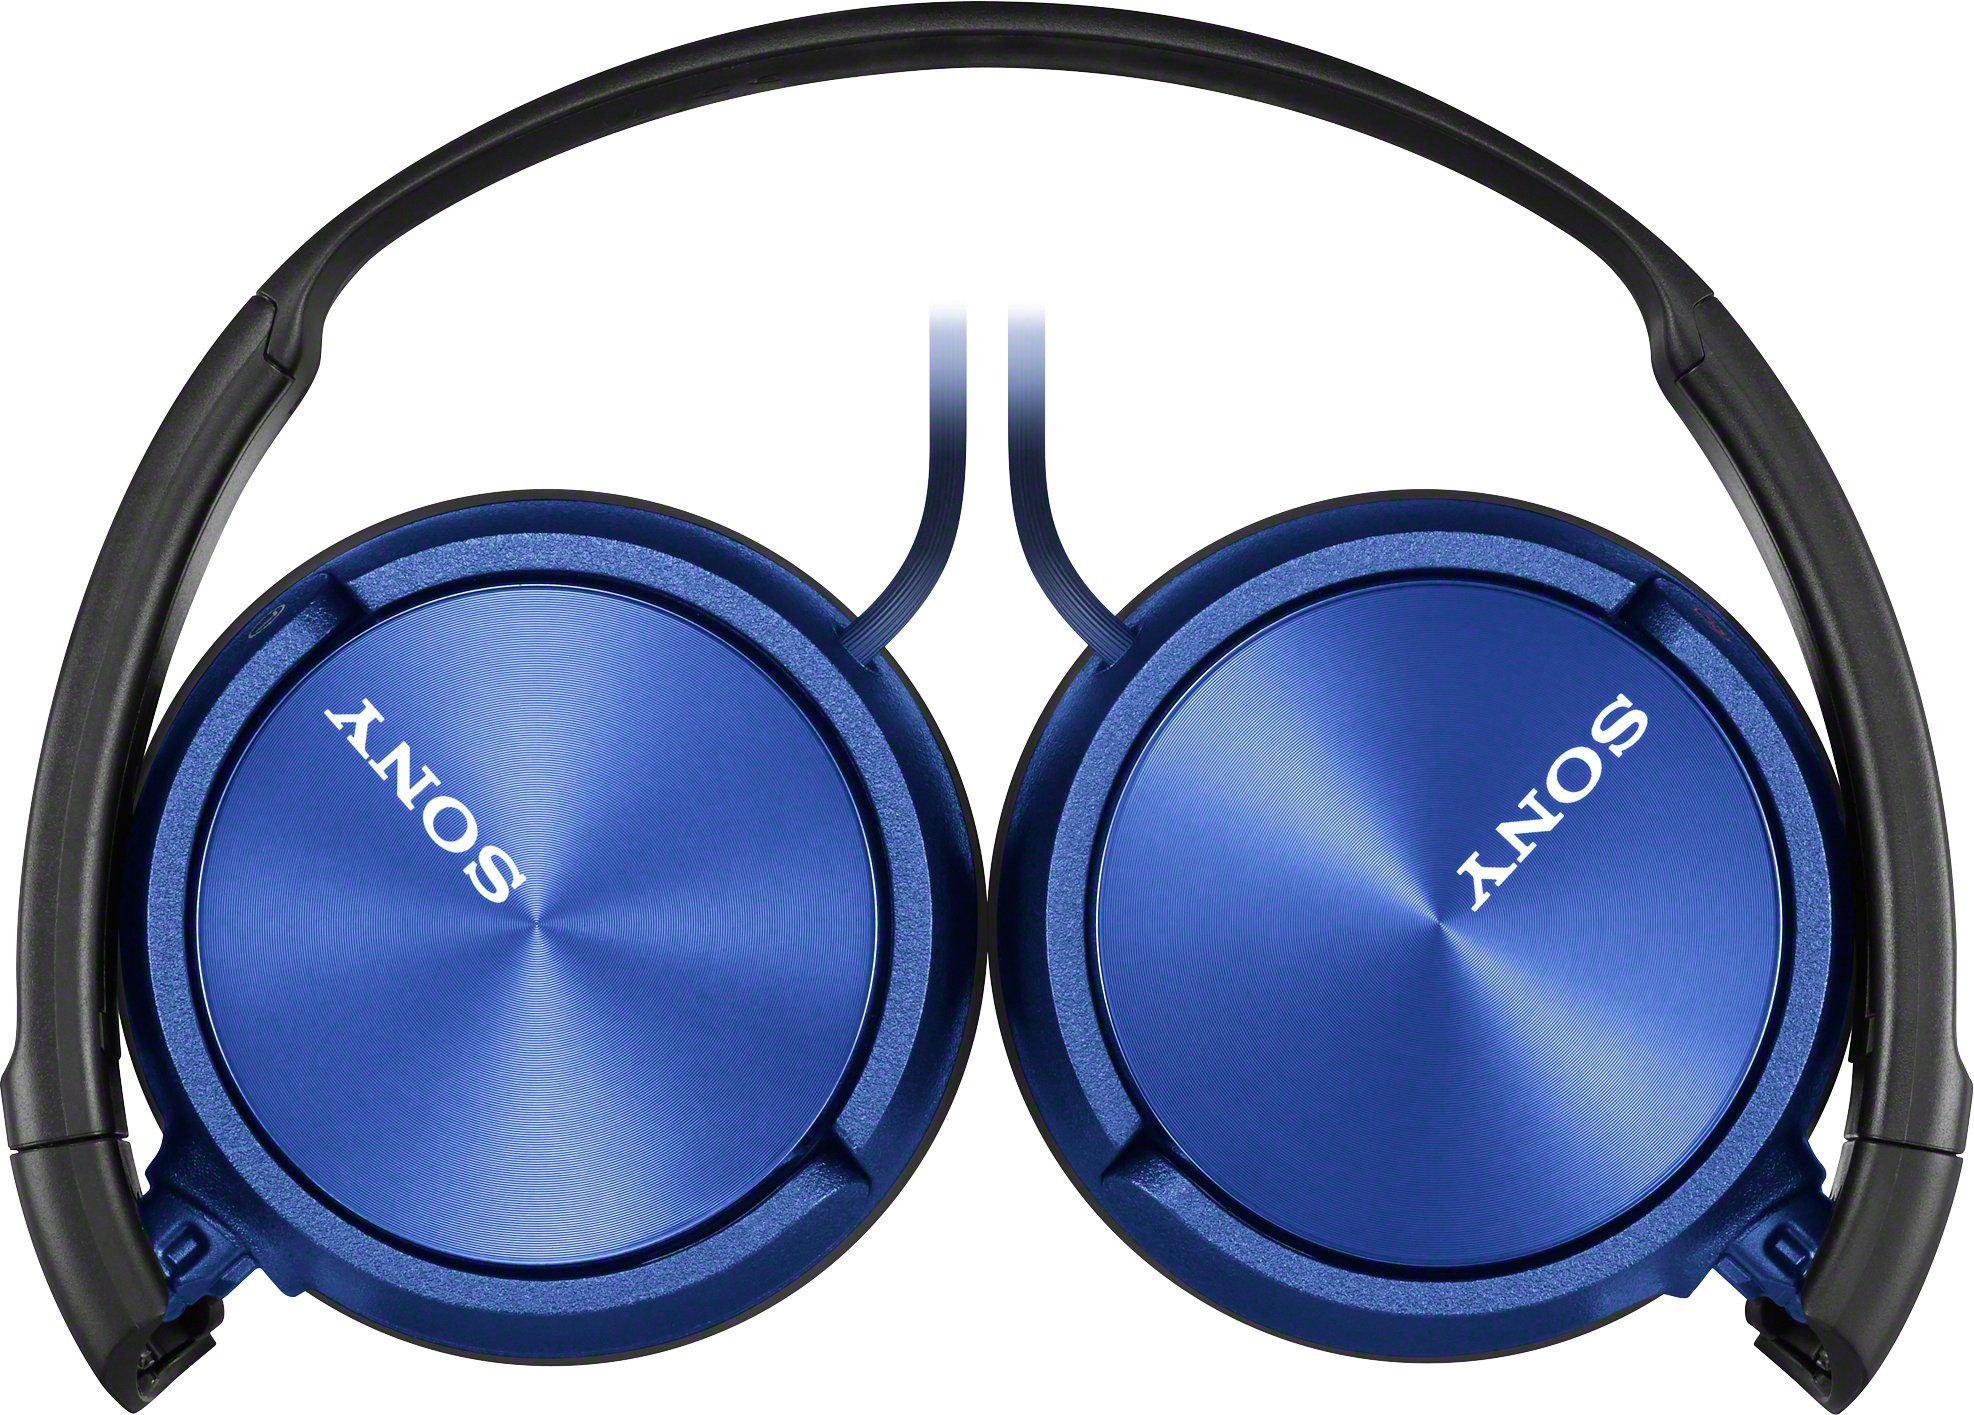 Over-Ear-Kopfhörer MDR-ZX310 blau Sony